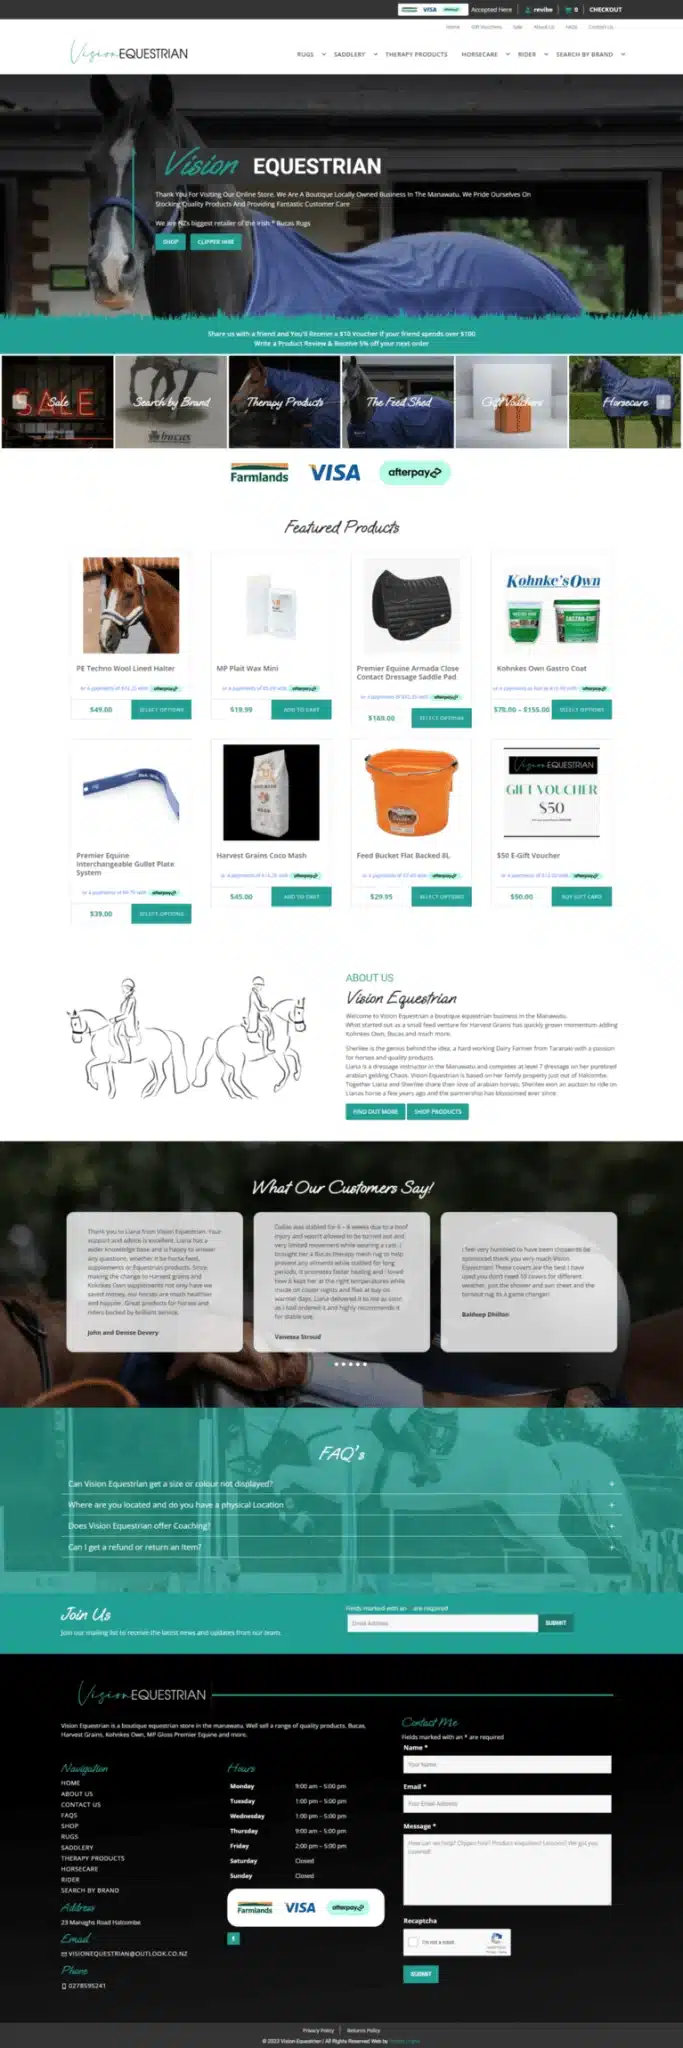 Vision Equestrian Website Development Portfolio Item - Embed NZ